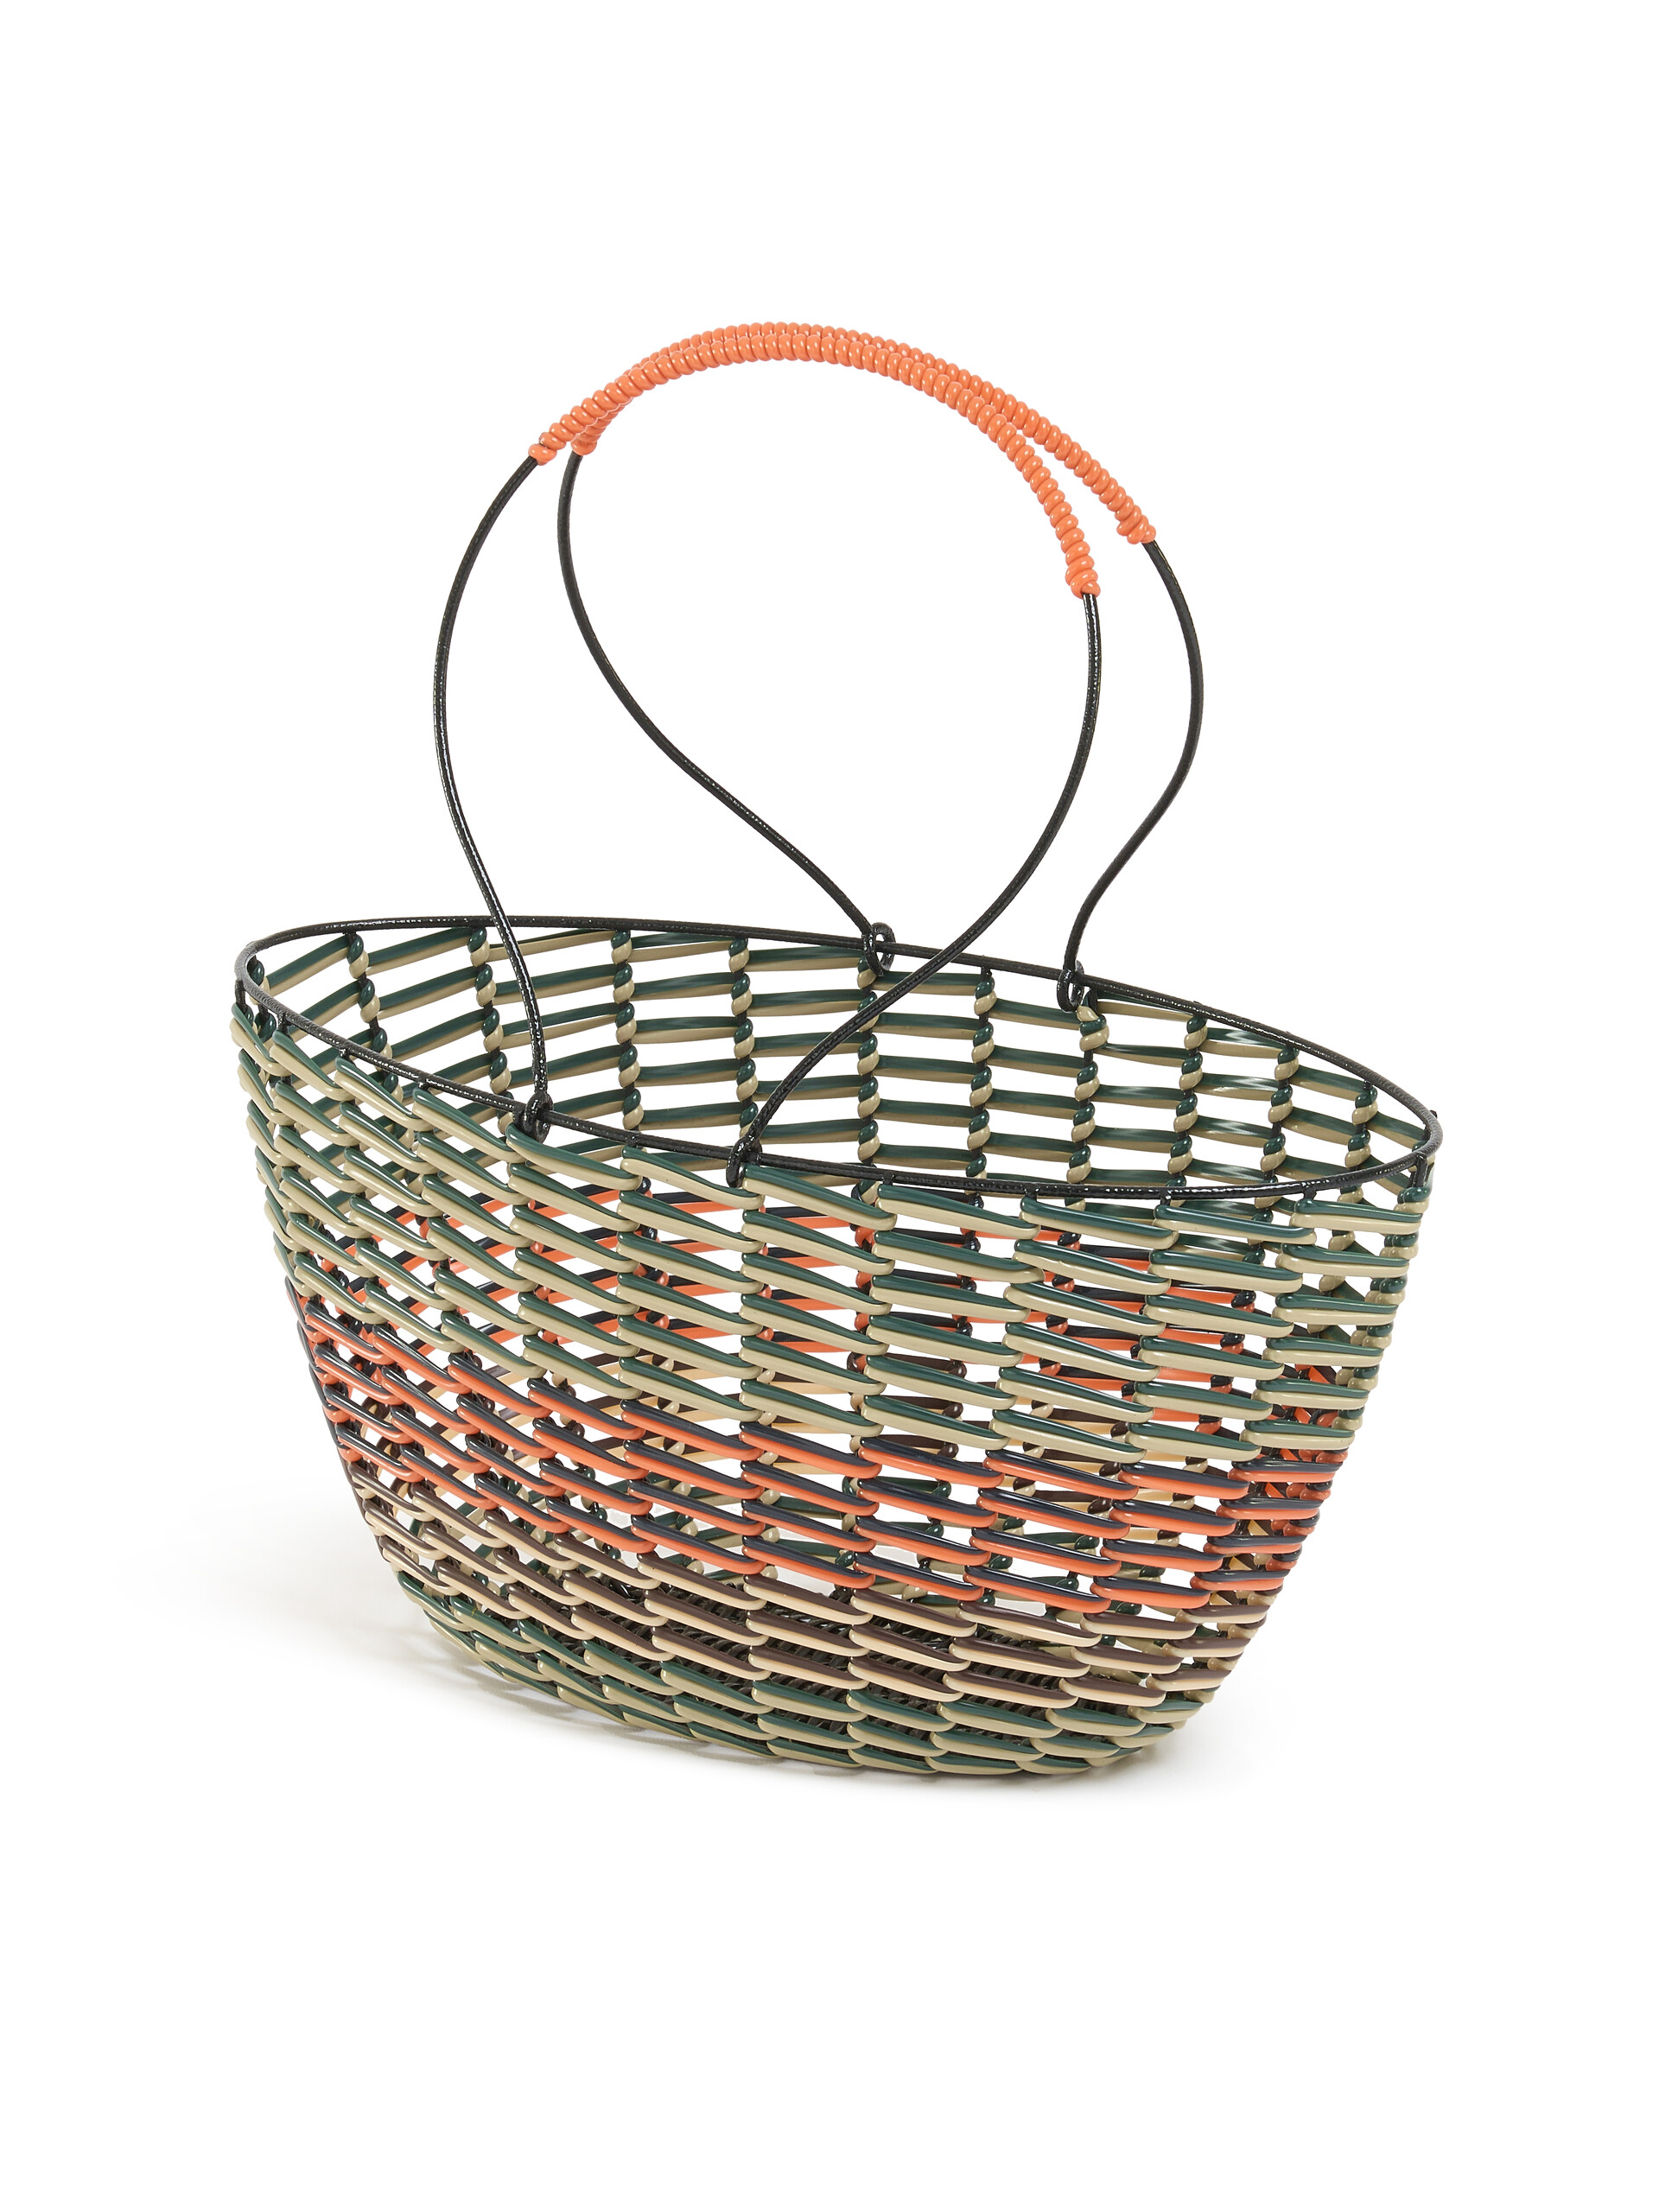 Green And Orange Marni Market Kitchen Basket - Accessories - Image 3